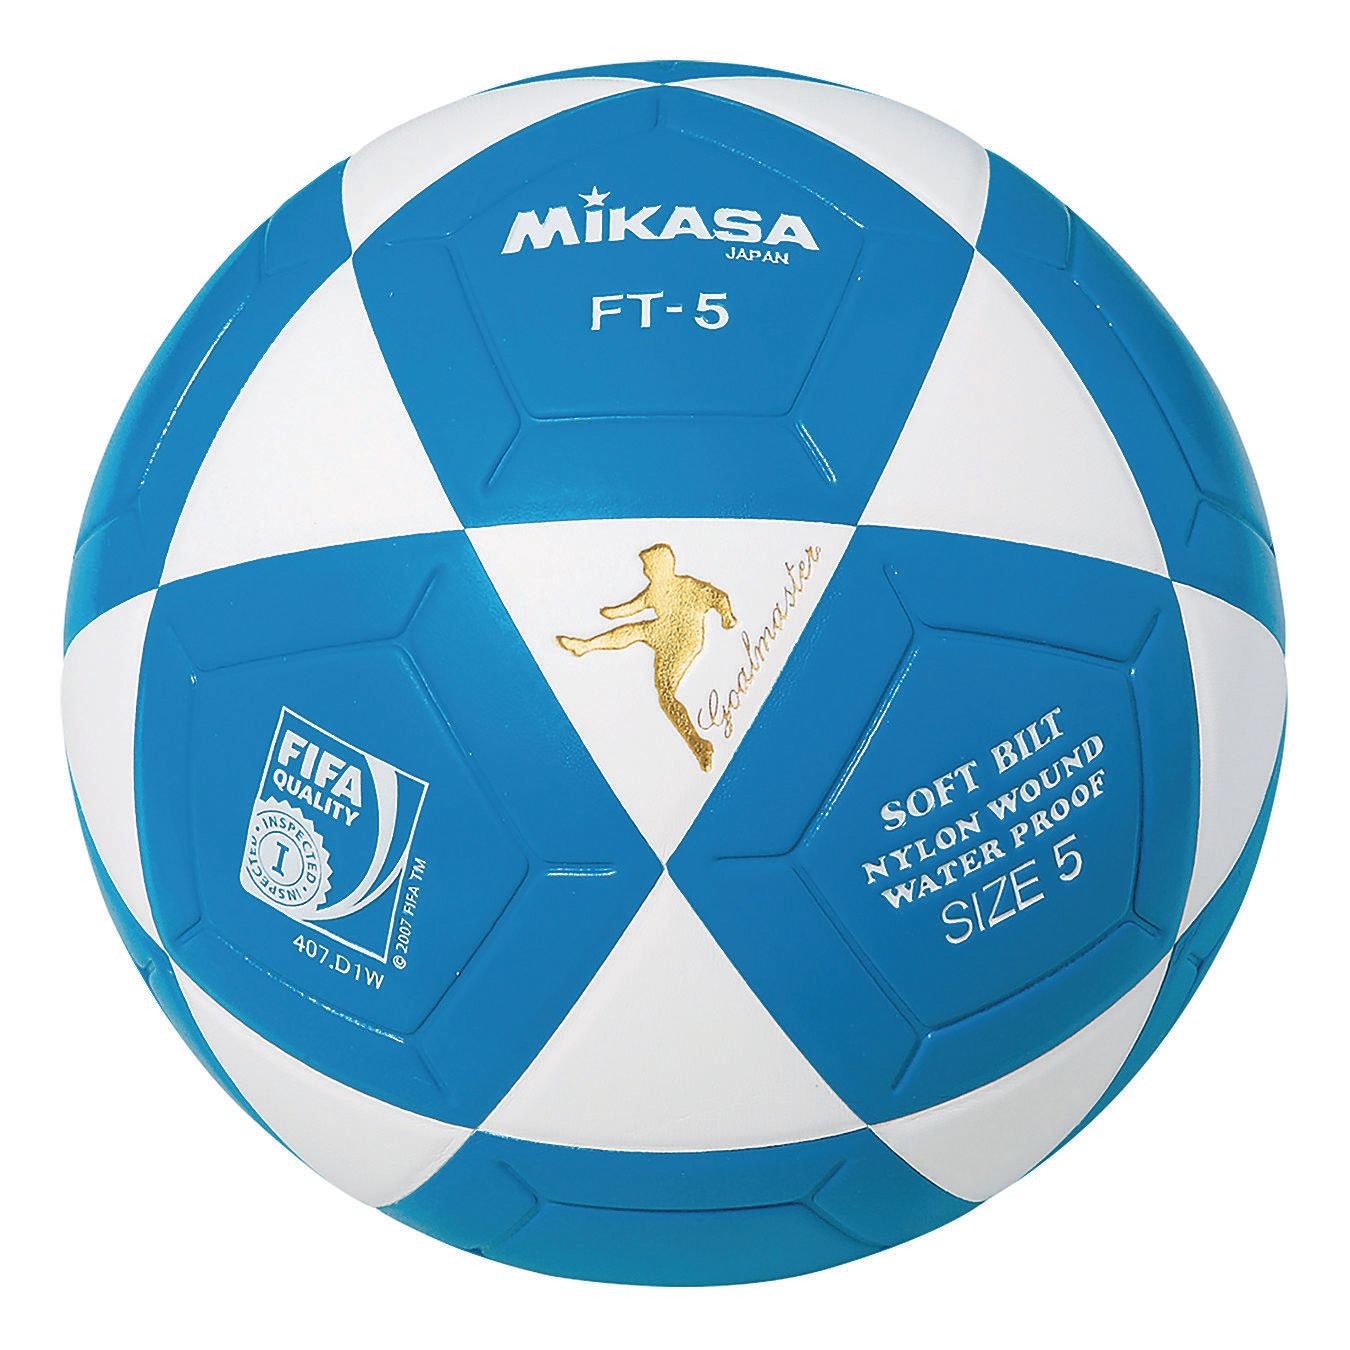 Mikasa VX3.5 Mini Ball Volleyball Ball balones Deportivos 15,2 cm